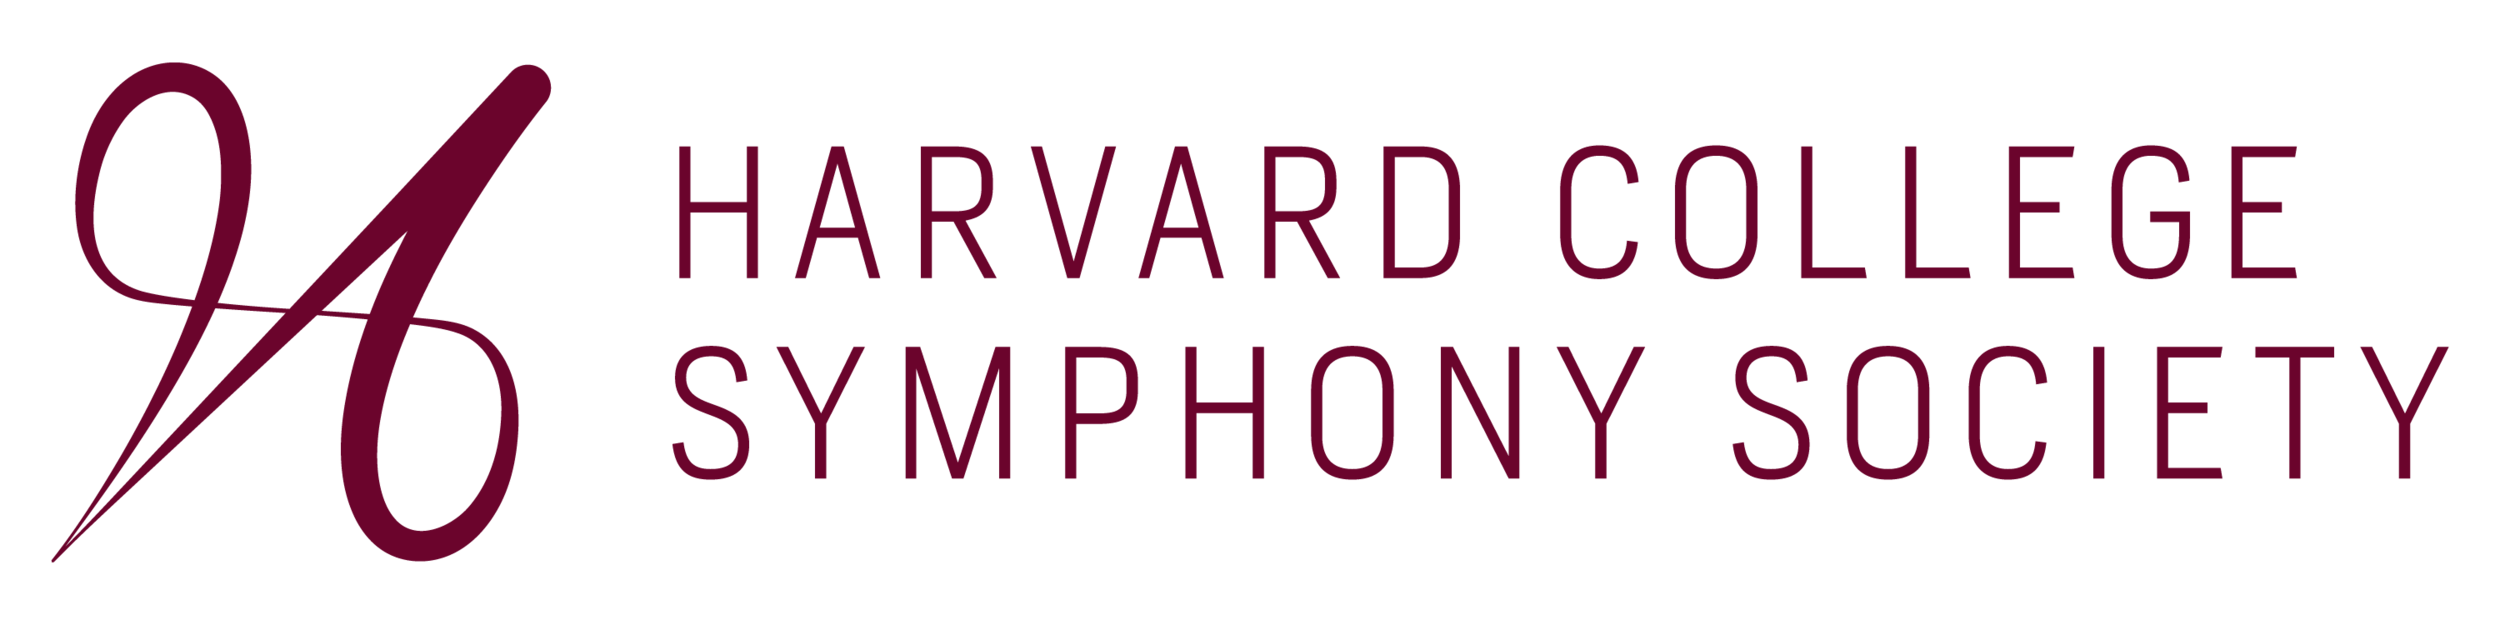 Harvard College Symphony Society